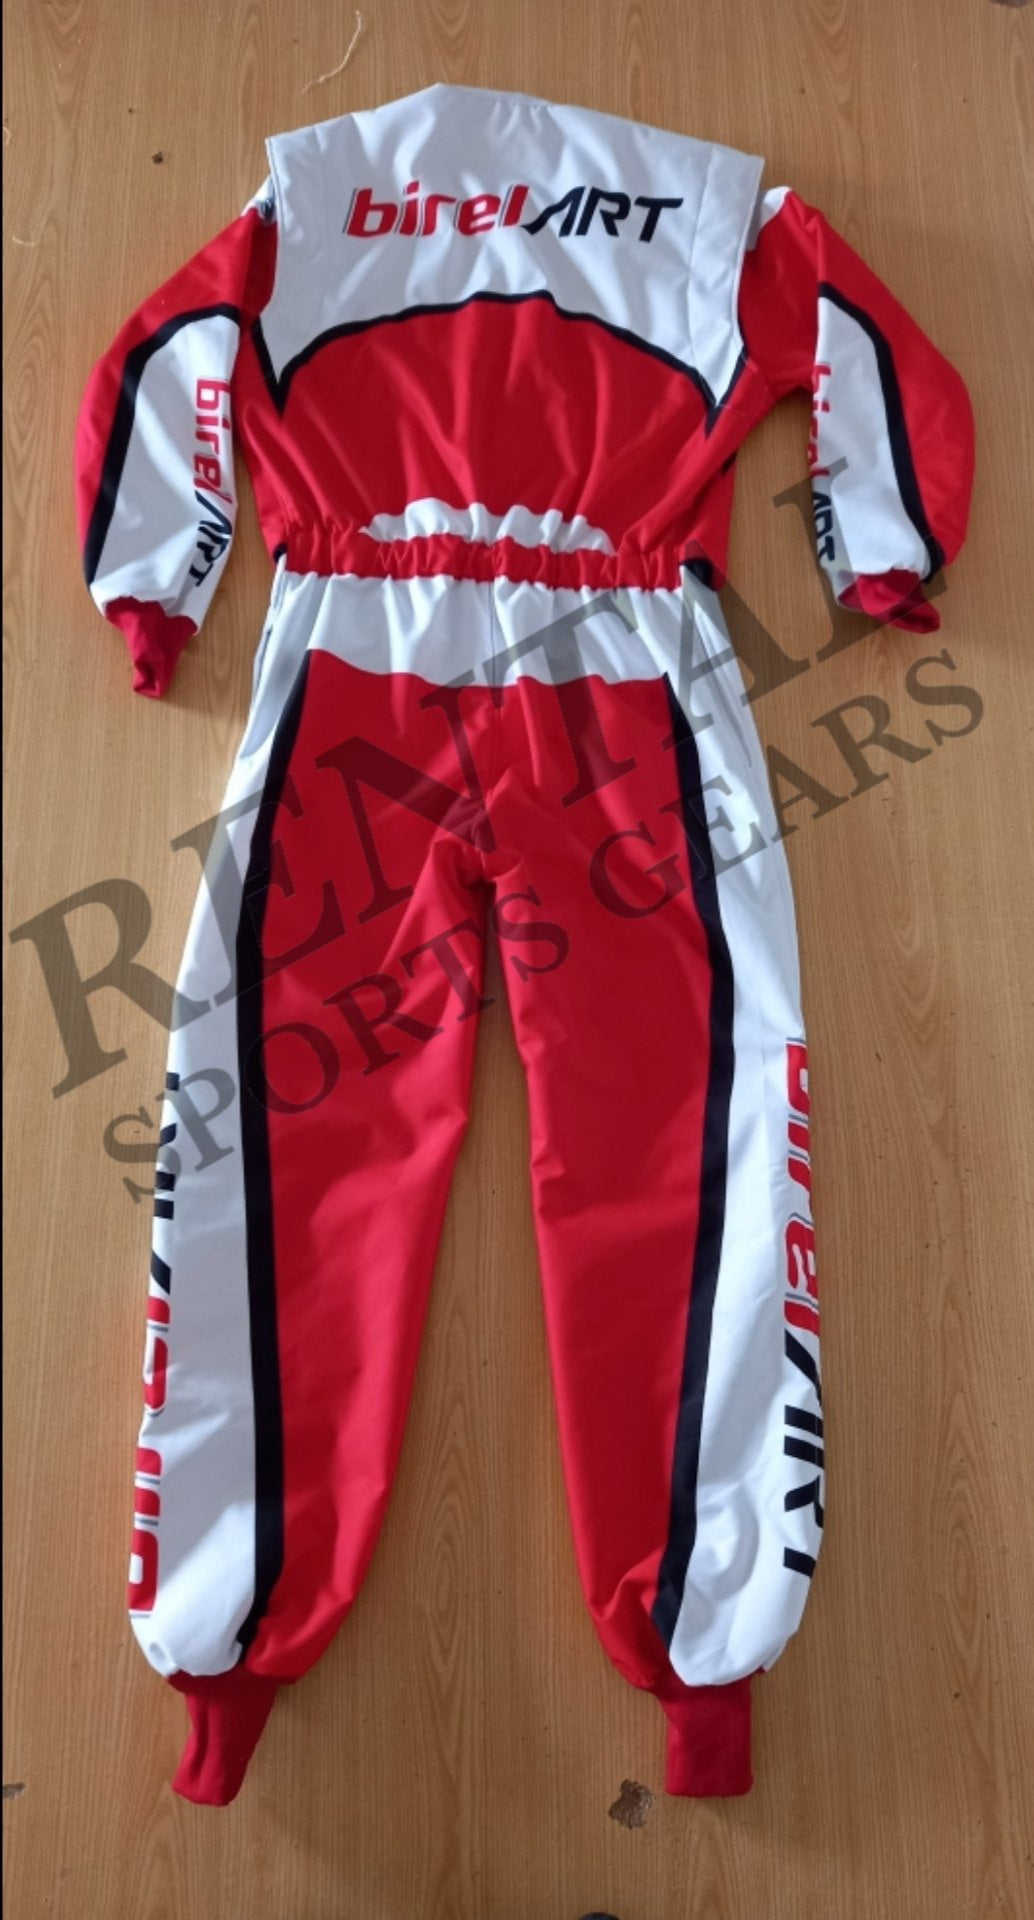 Birel Art Freem Kart Race Suit / Freem Kart suit